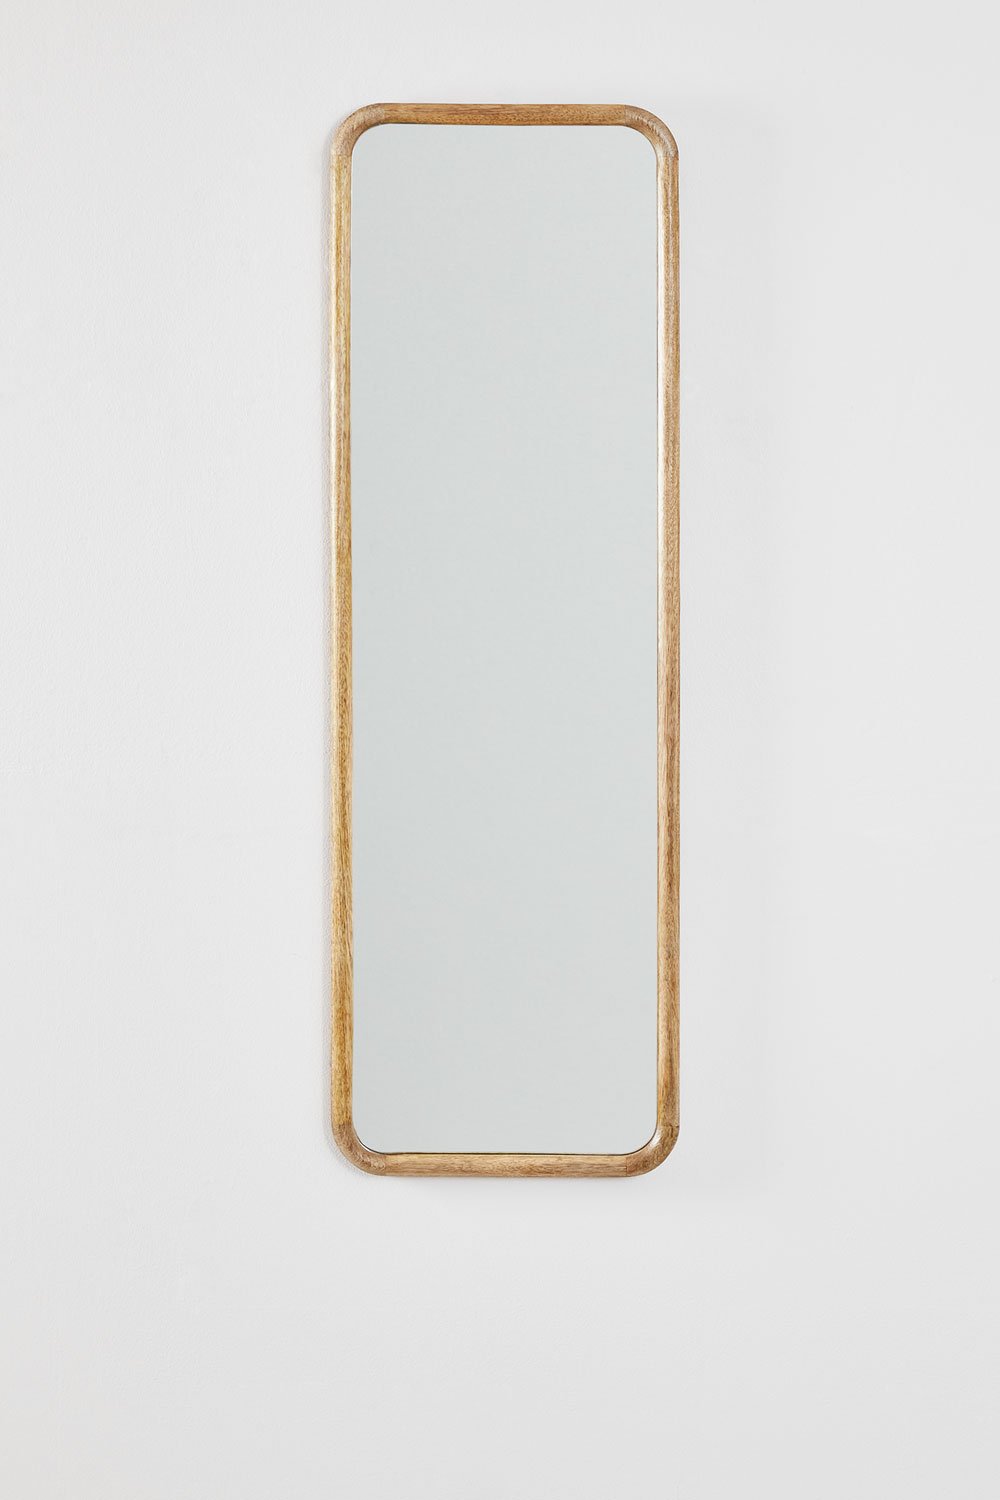 Rectangular Wall Mirror in Mango Wood (36.5x115 cm) Mirtzia, gallery image 1